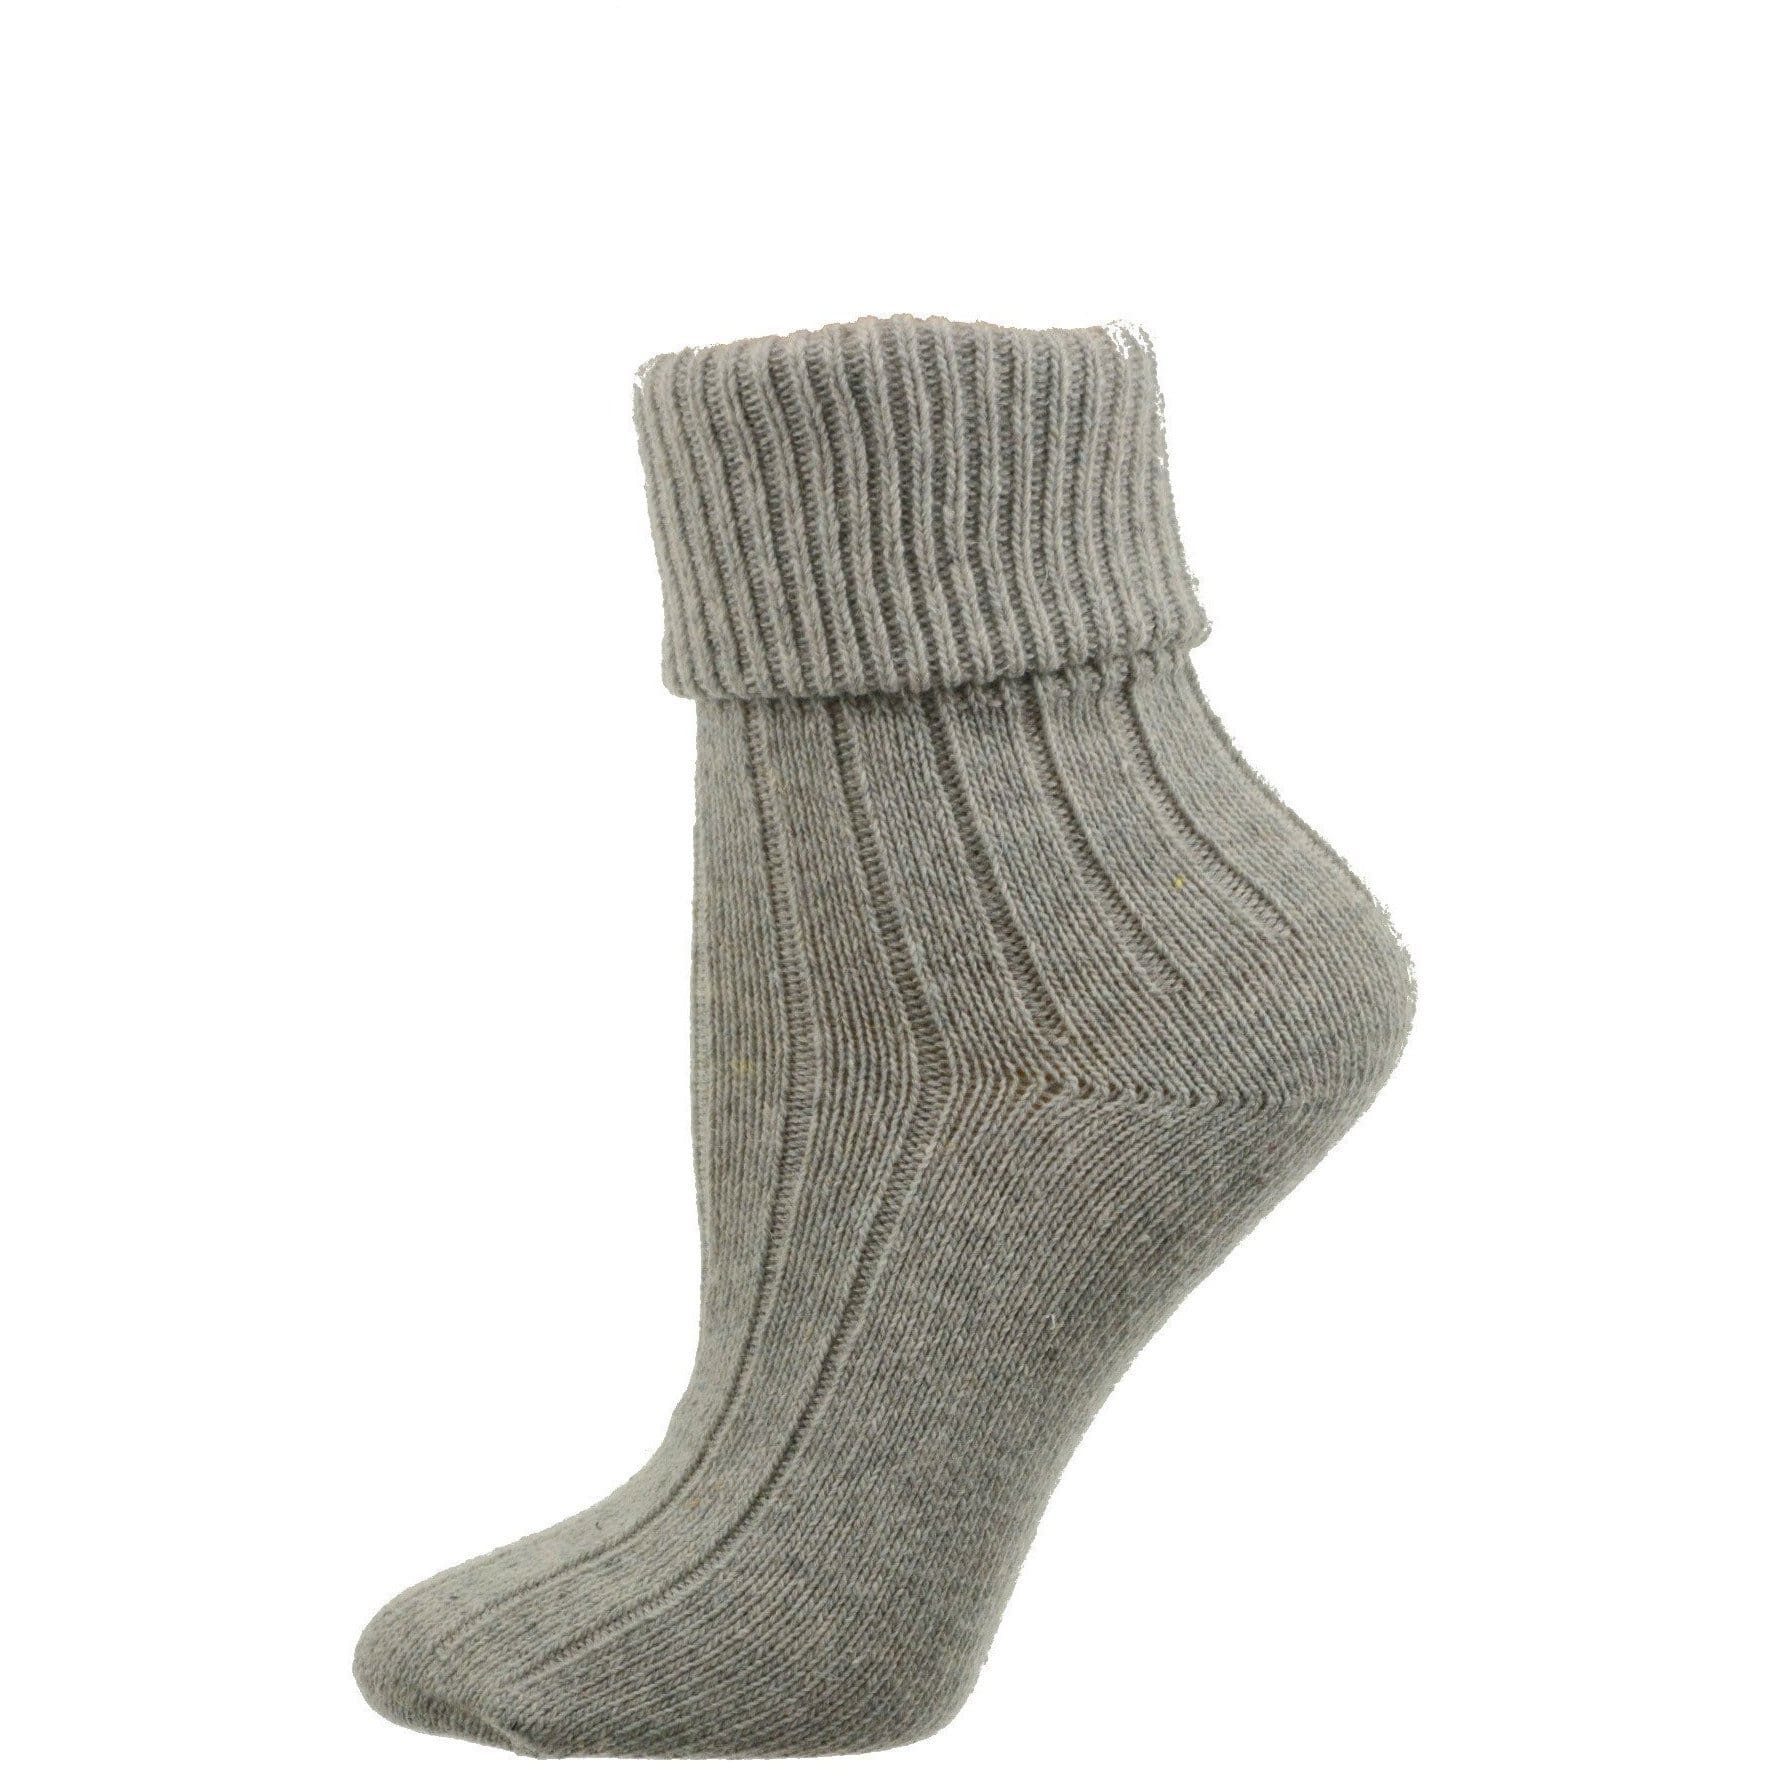 Wool/Cotton Blend Turncuff, Seamless Toe Socks For Women Women